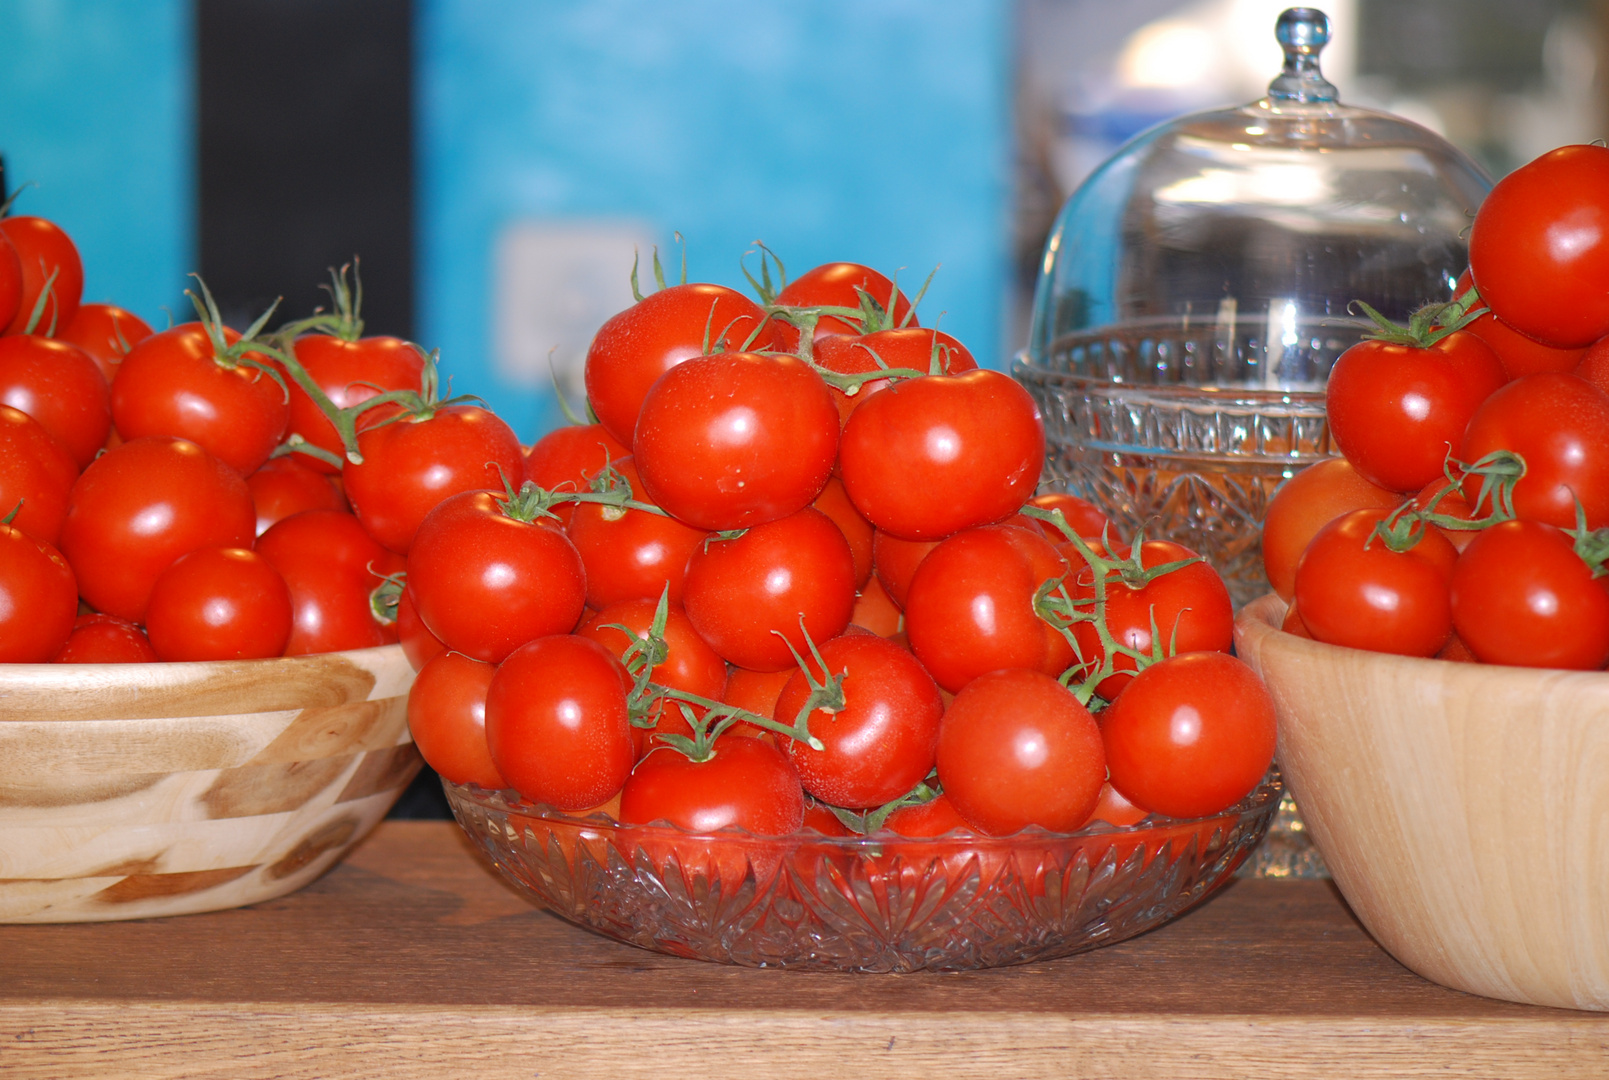 Tomatomania el liug da fiug